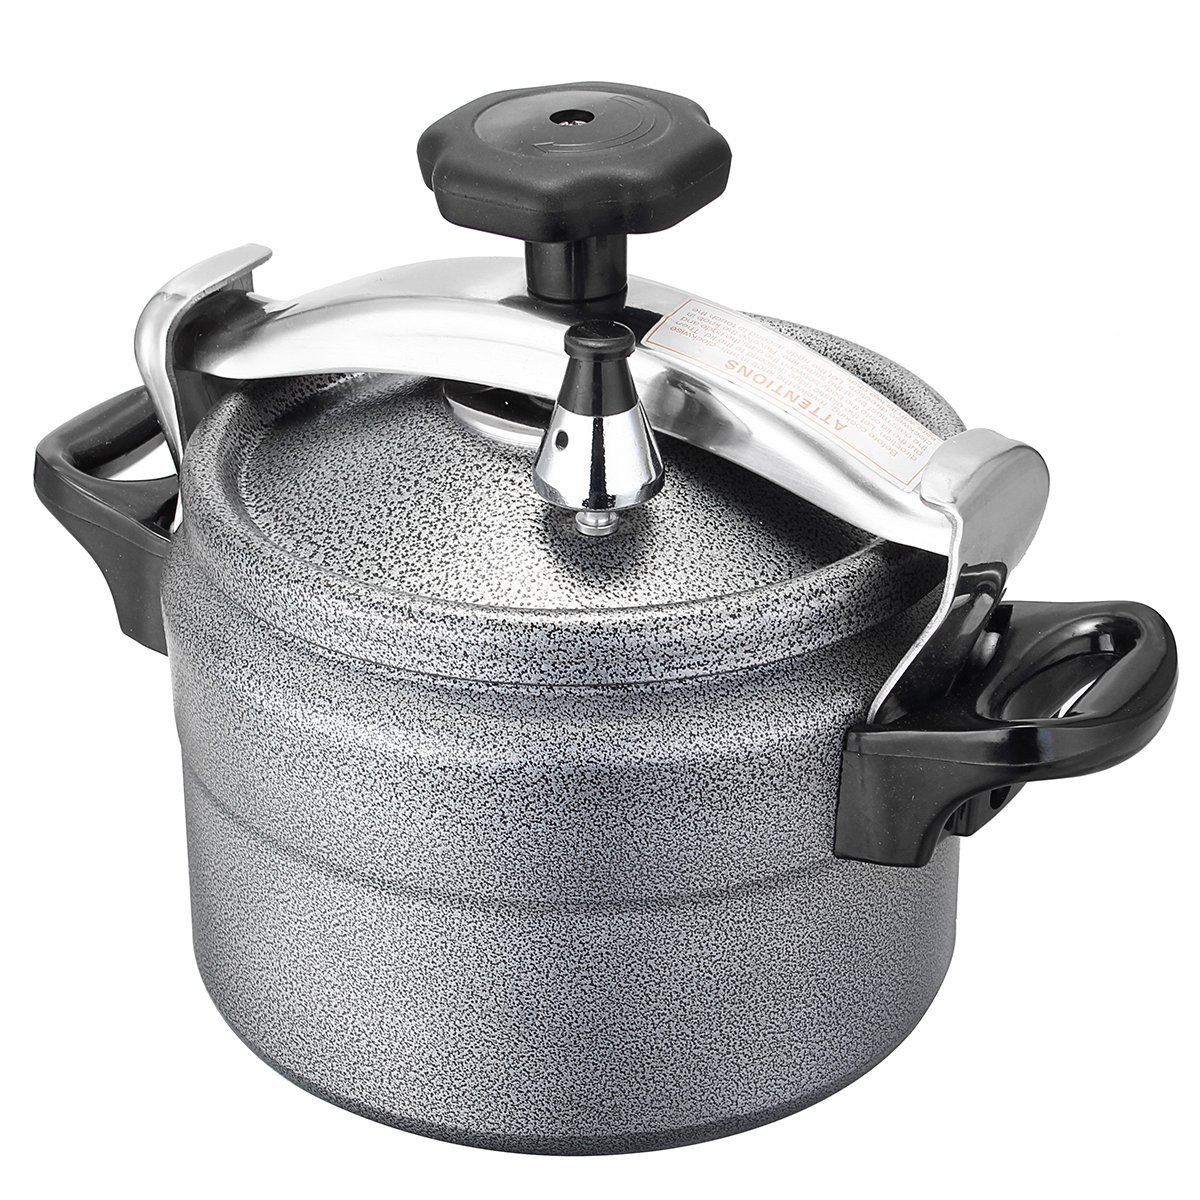 Slkima 3L Portable Aluminium Pressure Rice Cooker Stovetop Cooking